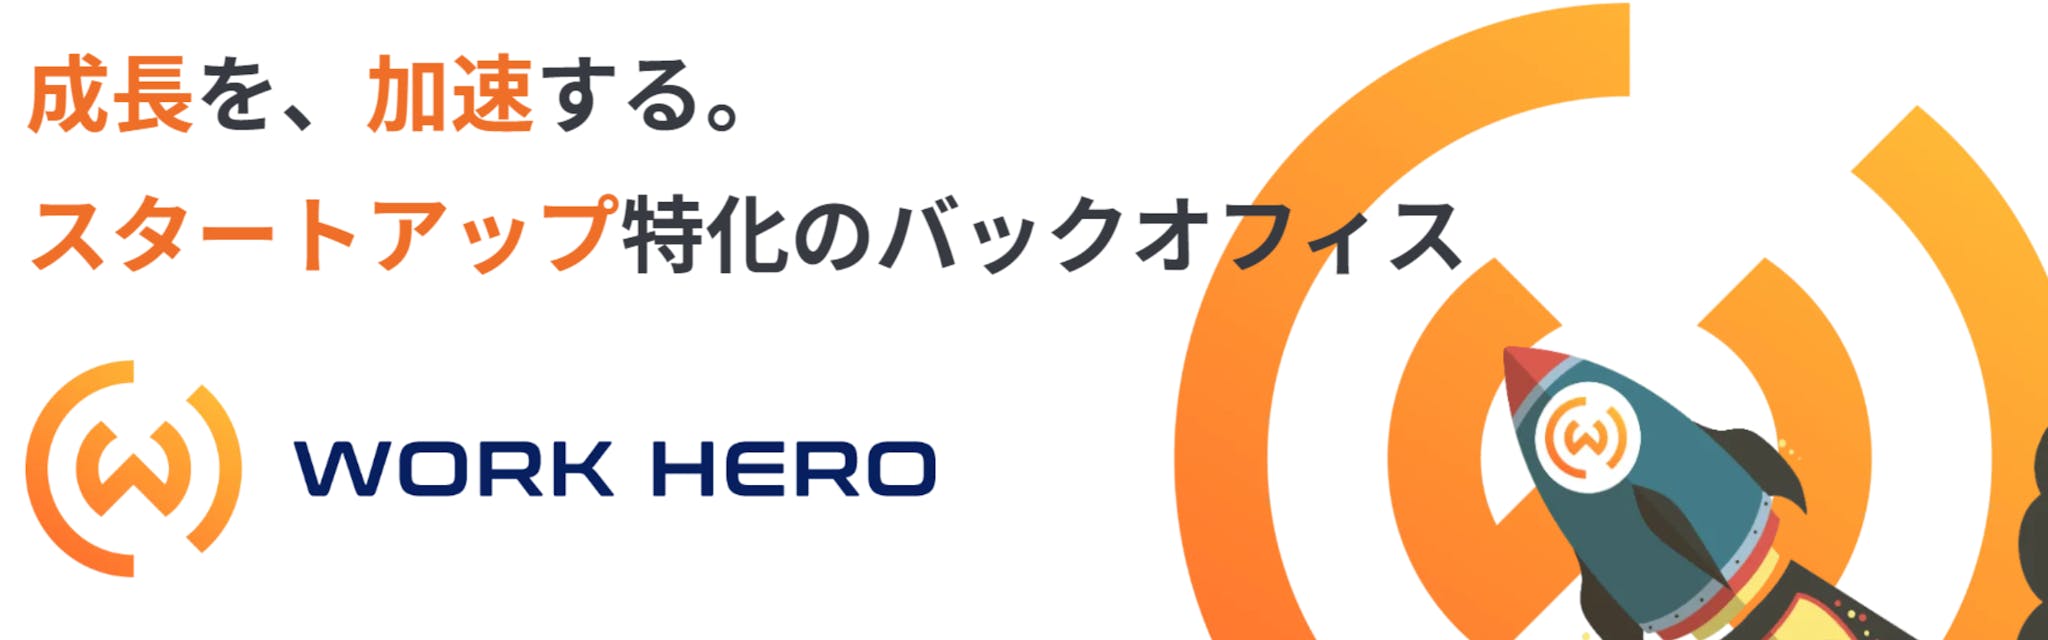  WORK HERO株式会社 - カバー画像